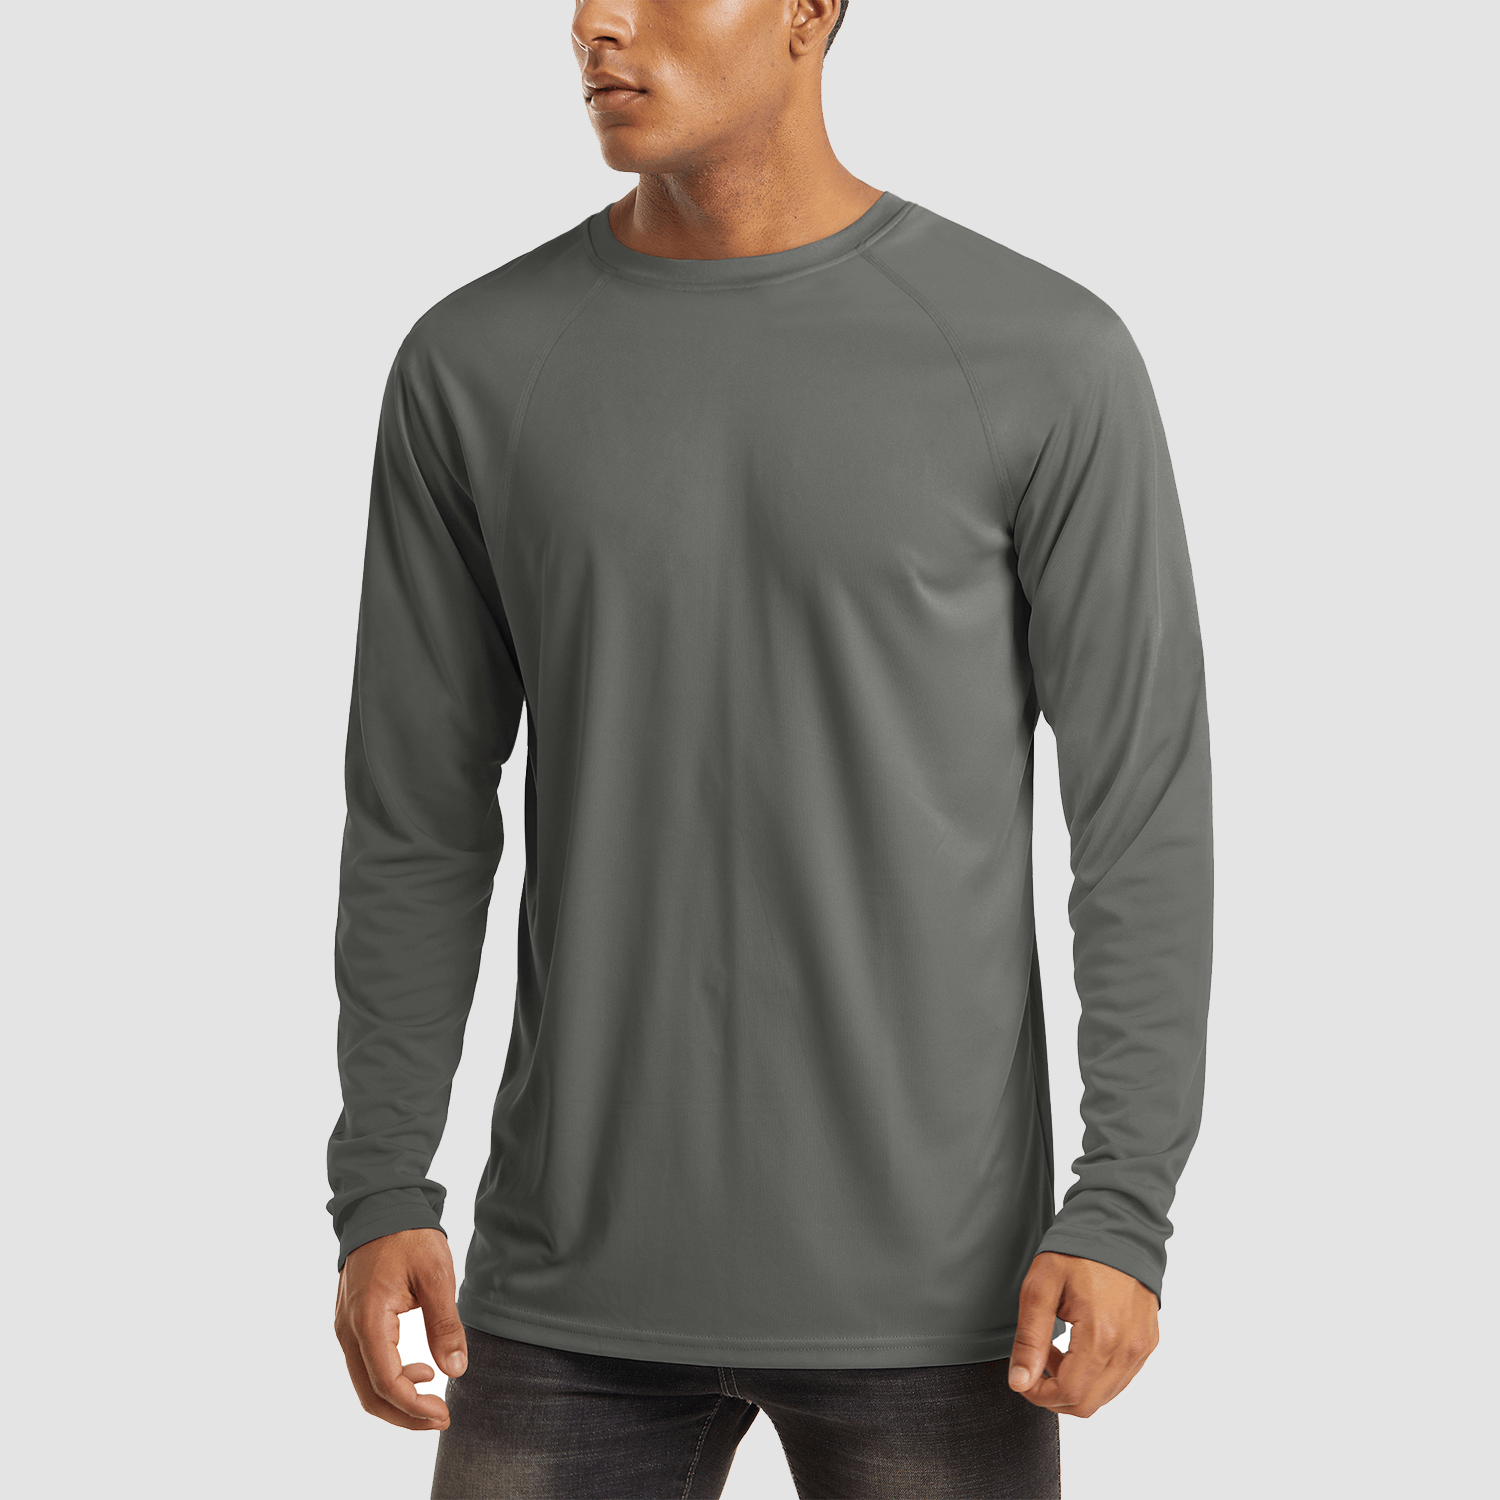 【Buy 4 Get 4th Free】Men's Long Sleeve Hooded Shirt UPF 50+ Athletic Shirt, Dark Grey / S